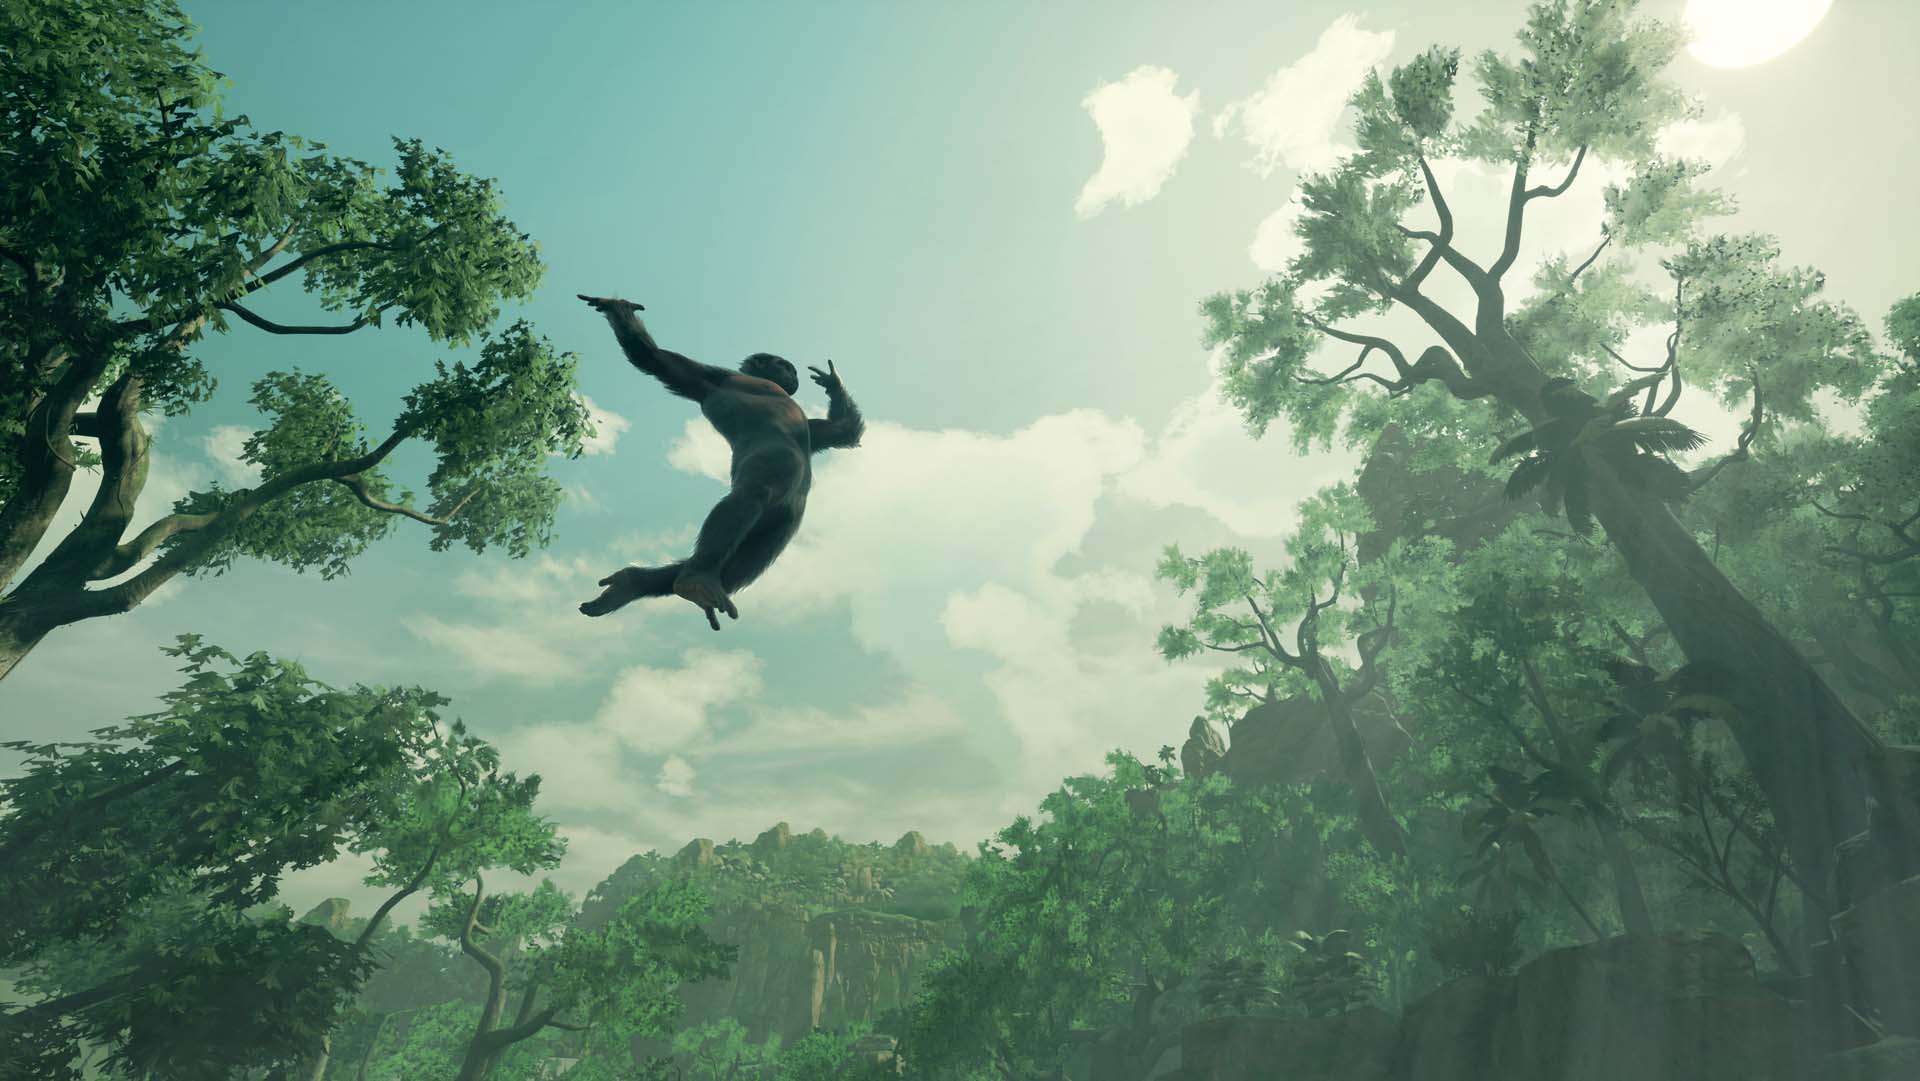 ［E3 2019］猿人の進化を描く大河ゲーム「Ancestors: The Humankind Odyssey」の開発者インタビュー。「全人類のルーツをみんなにプレイしてほしい」［E3 2019］猿人の進化を描く大河ゲーム「Ancestors: The Humankind Odyssey」の開発者インタビュー。「全人類のルーツをみんなにプレイしてほしい」